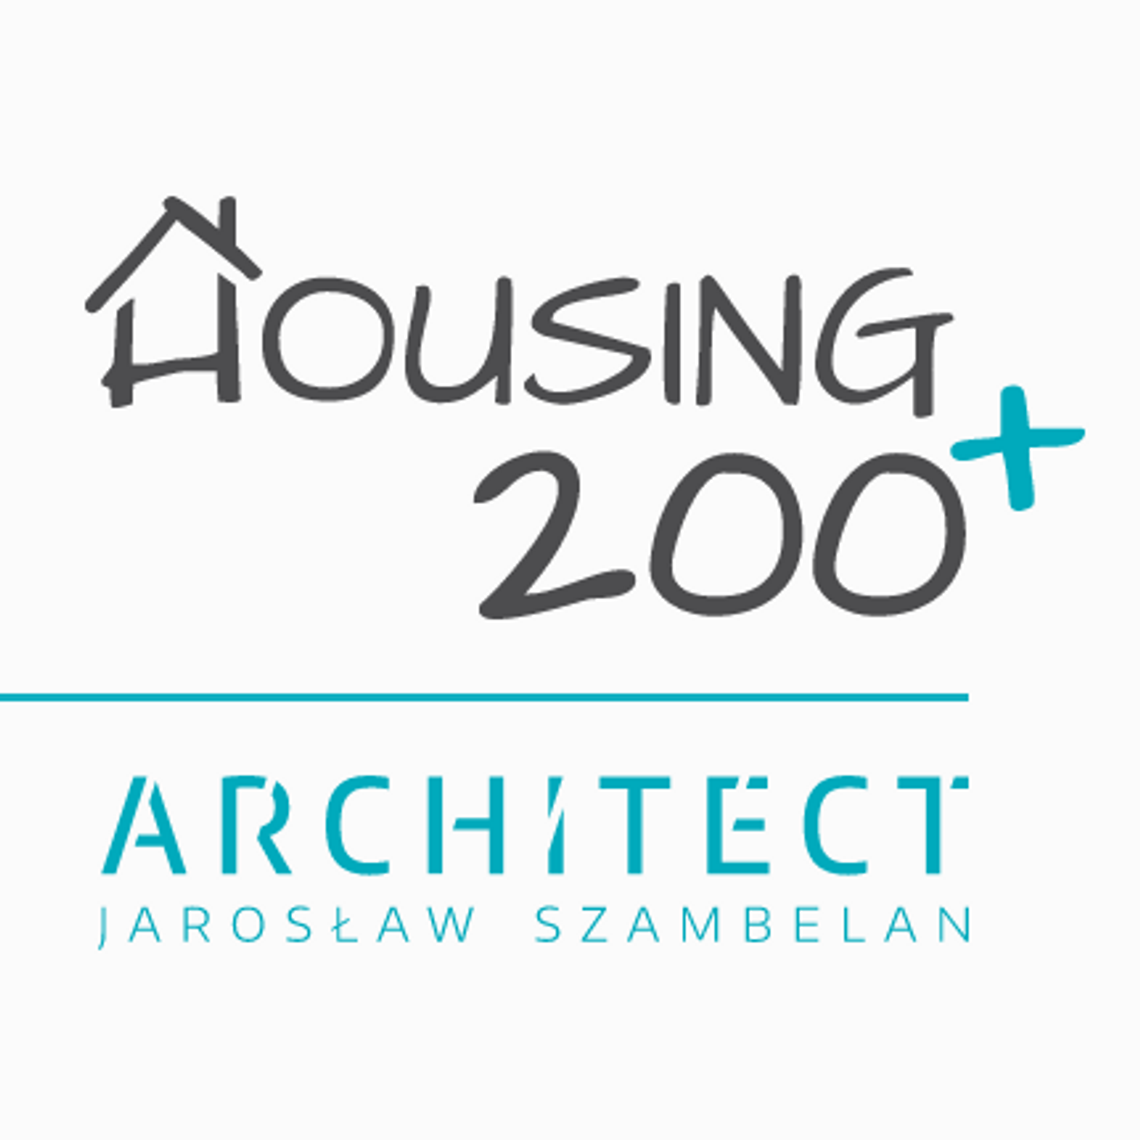 Housing 200+ Architect Jarosław Szambelan